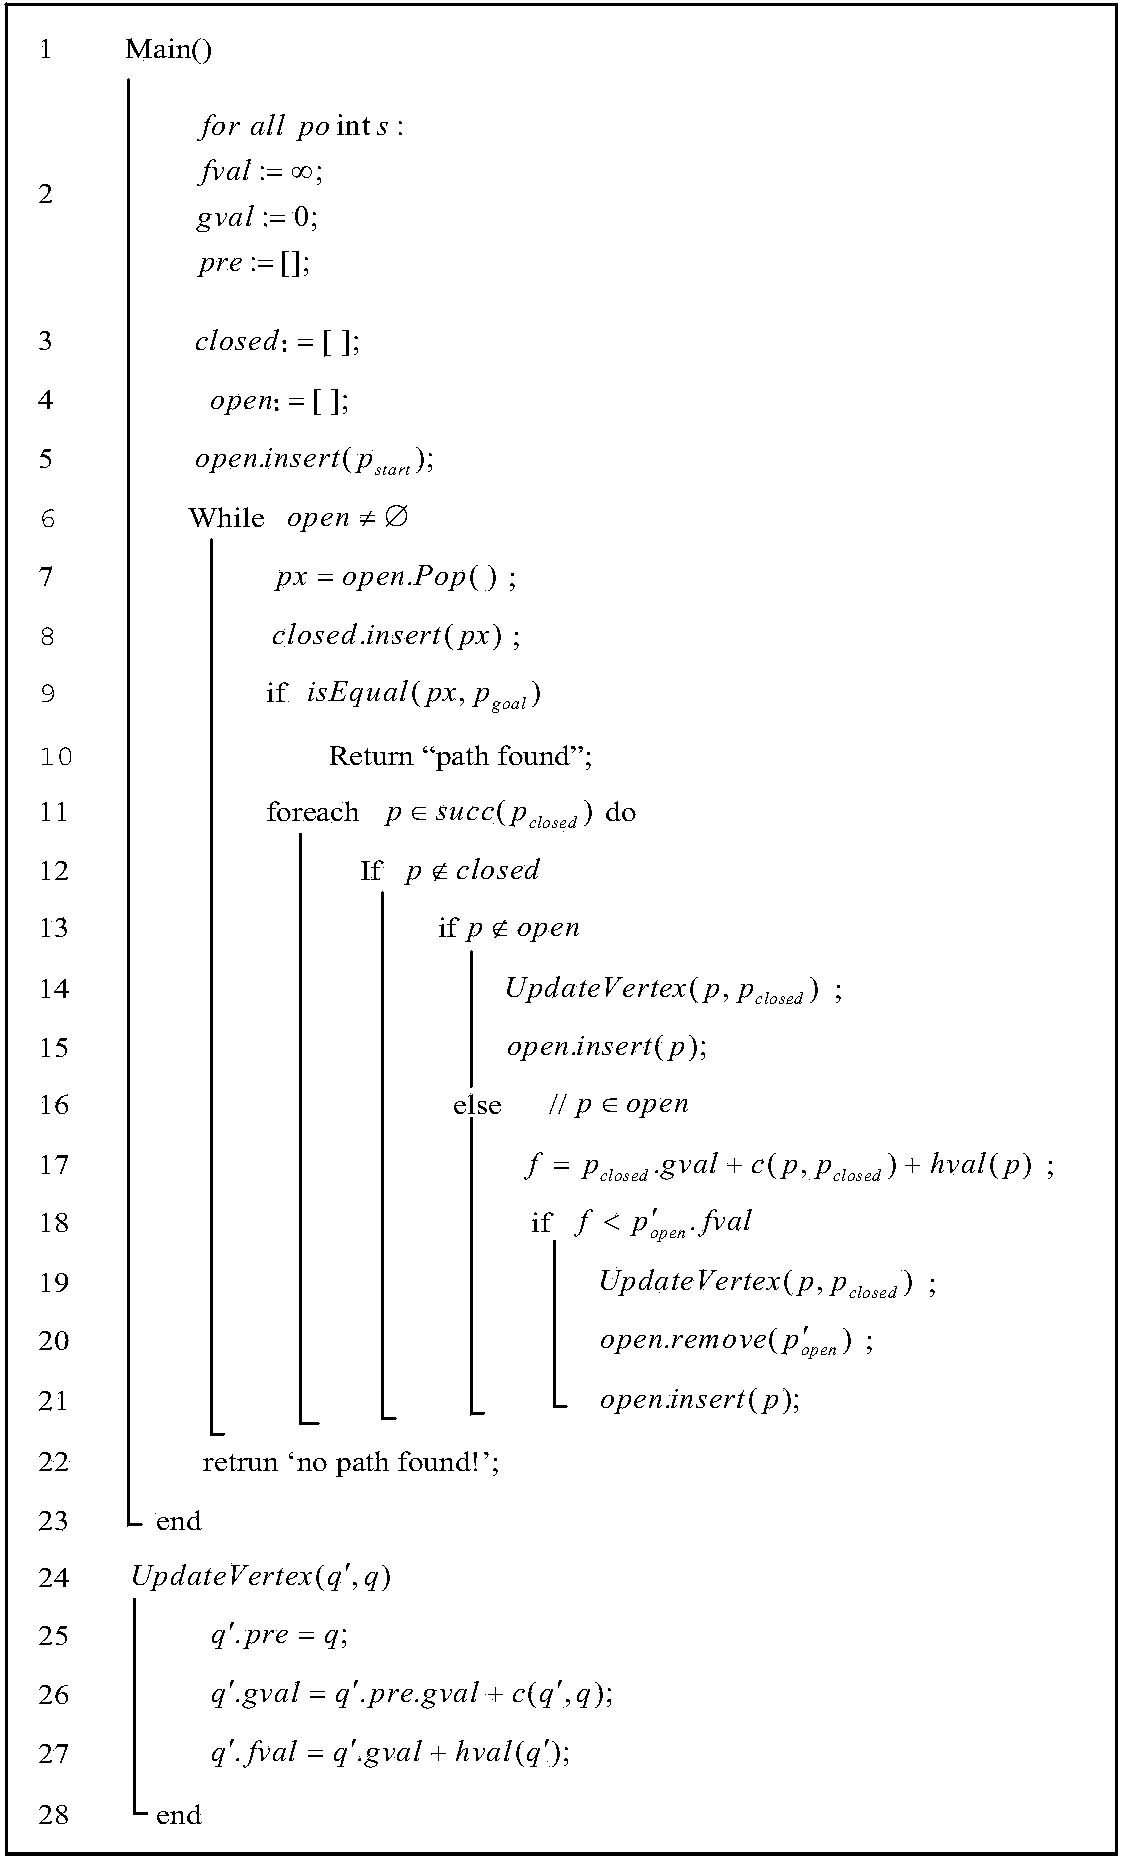 Lambda* path planning algorithm